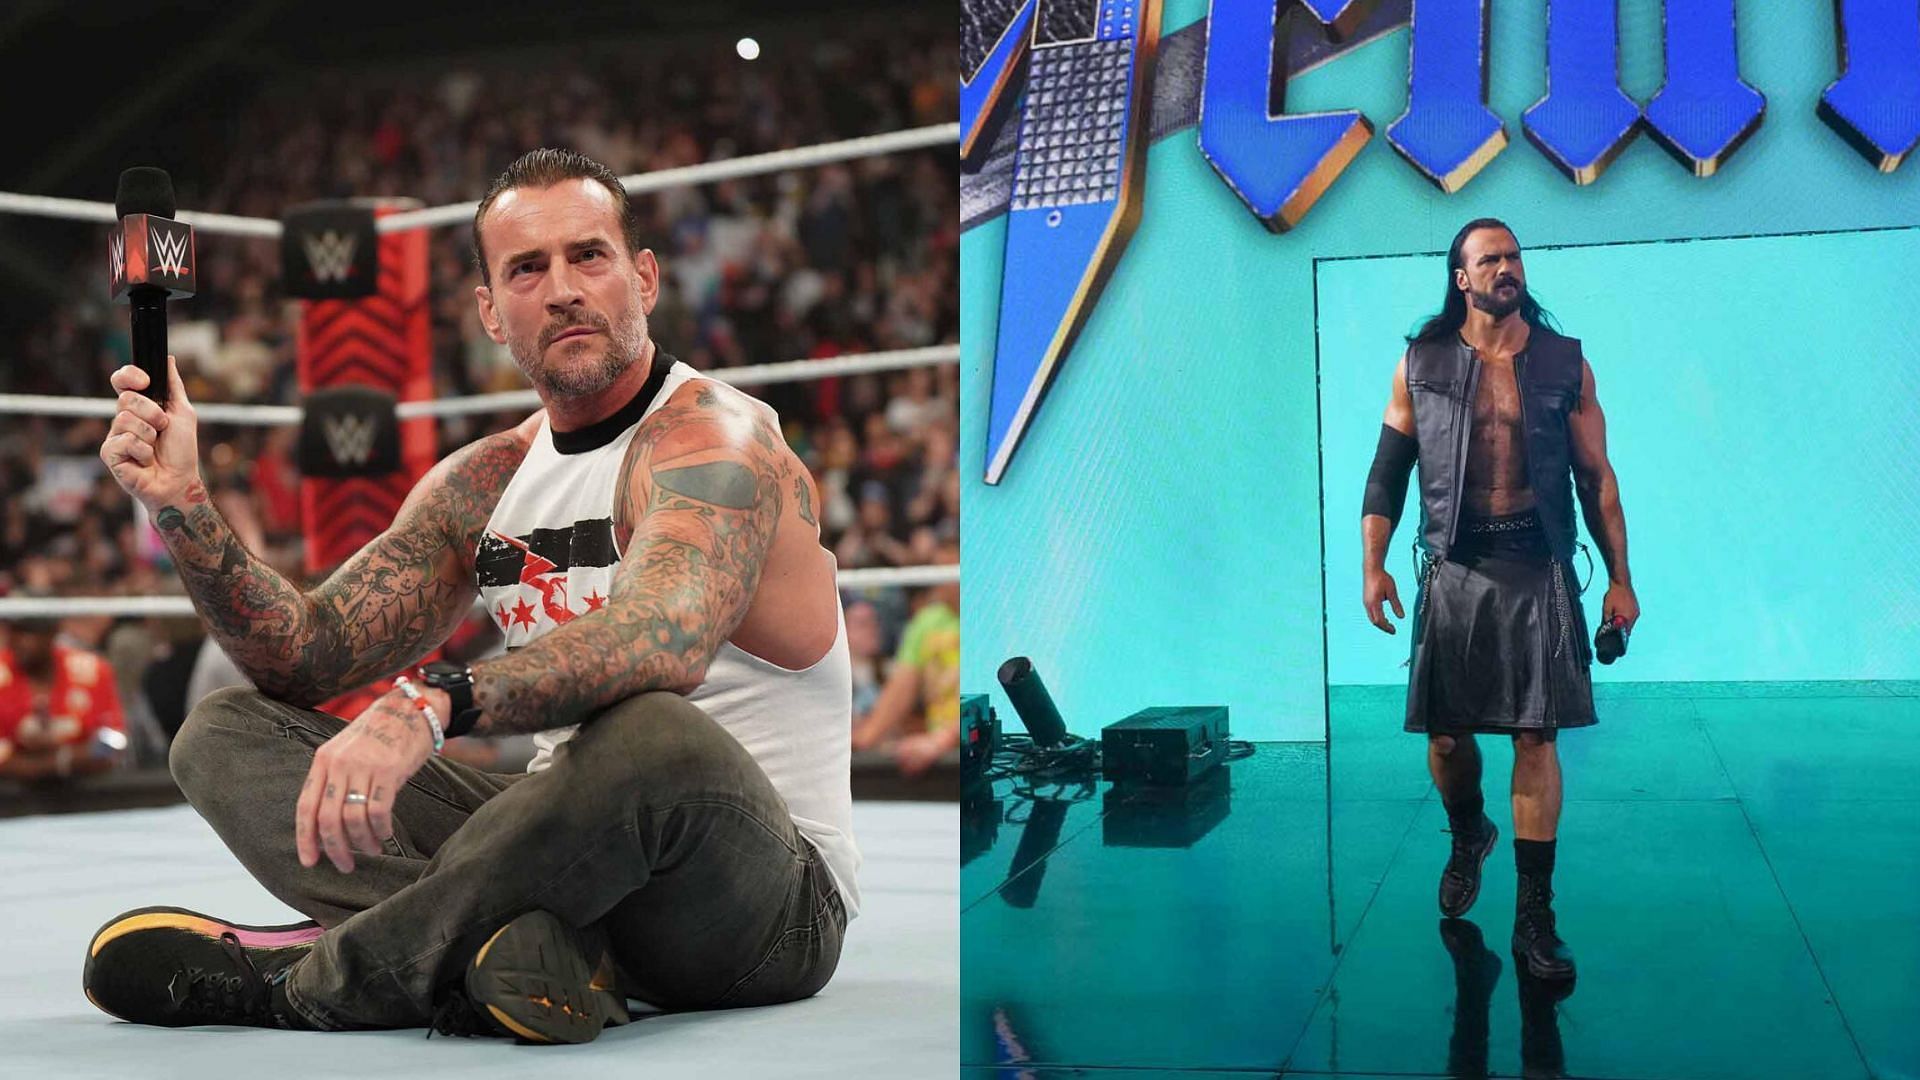 CM Punk and Drew McIntyre were both present at WWE RAW